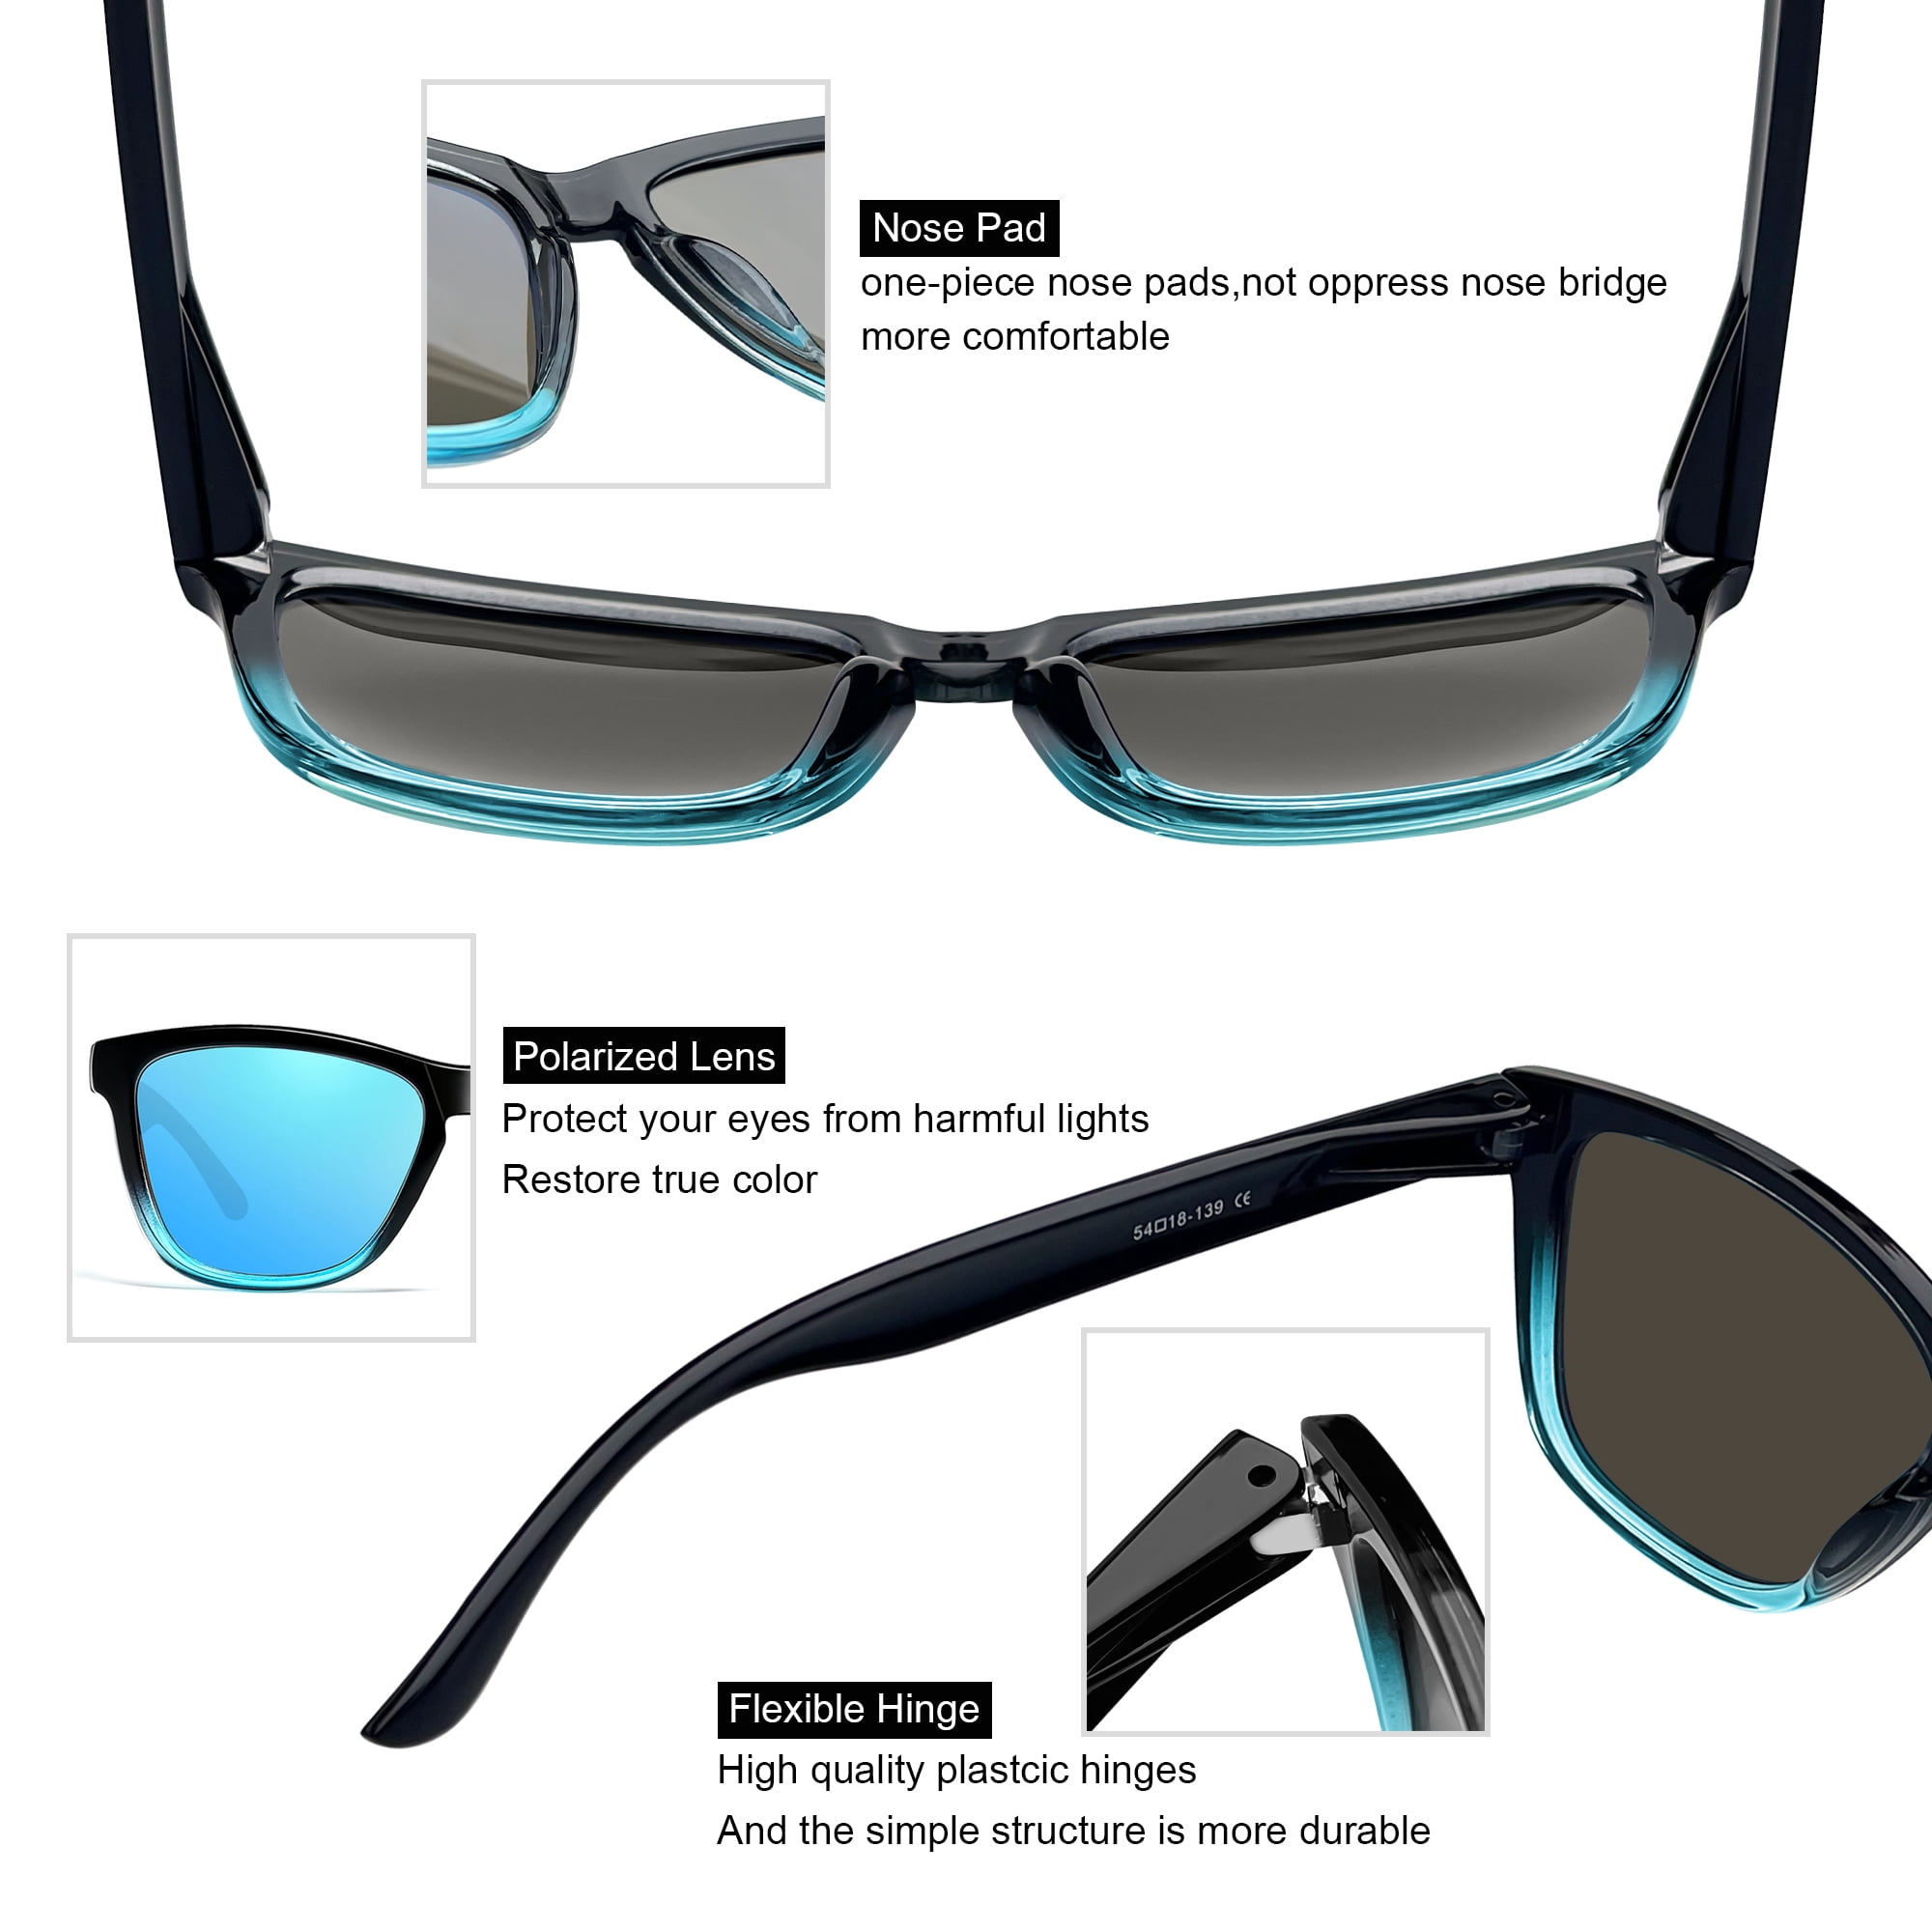 Joopin Square Polarized Sunglasses for Men Women, Lightweight Rectangle  UV400 Mirrored Sport Sun Glasses (Ice Blue) 